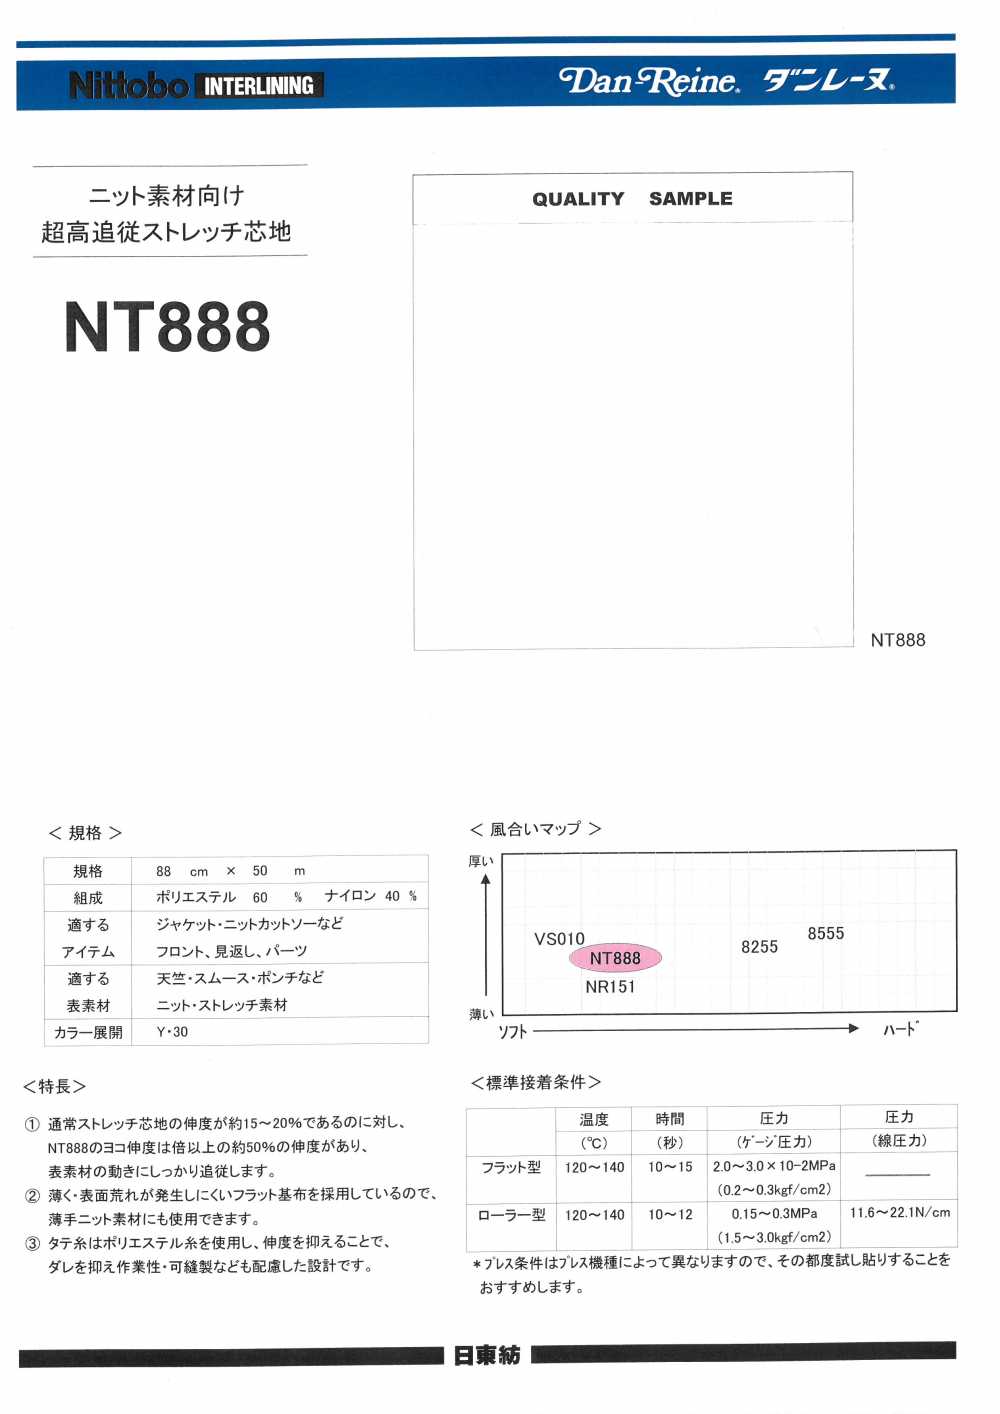 NT888 Danlaine Ultra-high Compliance Stretch Interlining 15D Para Materiais De Malha[Entrelinha] Nittobo